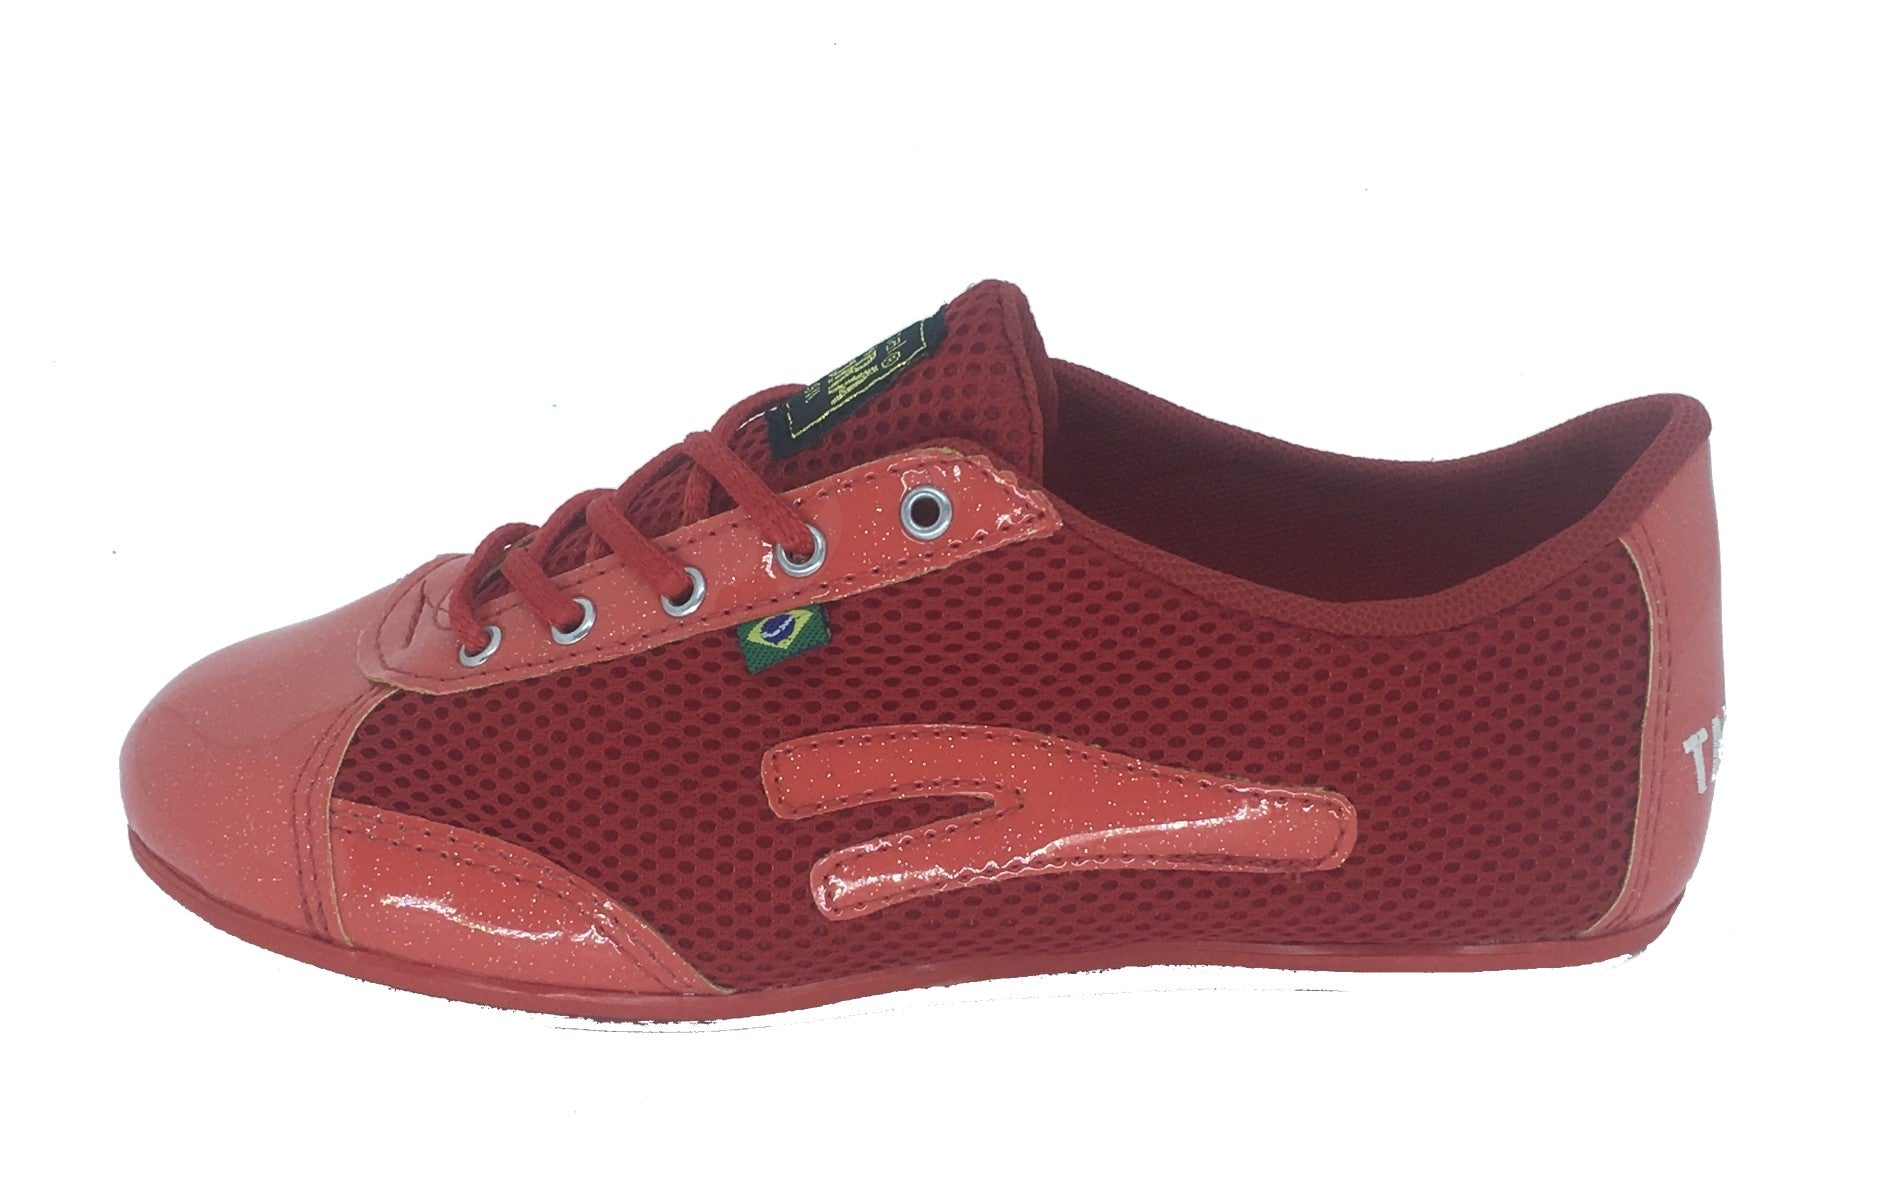 "Dança" sneaker edition Red Patent with Glitter